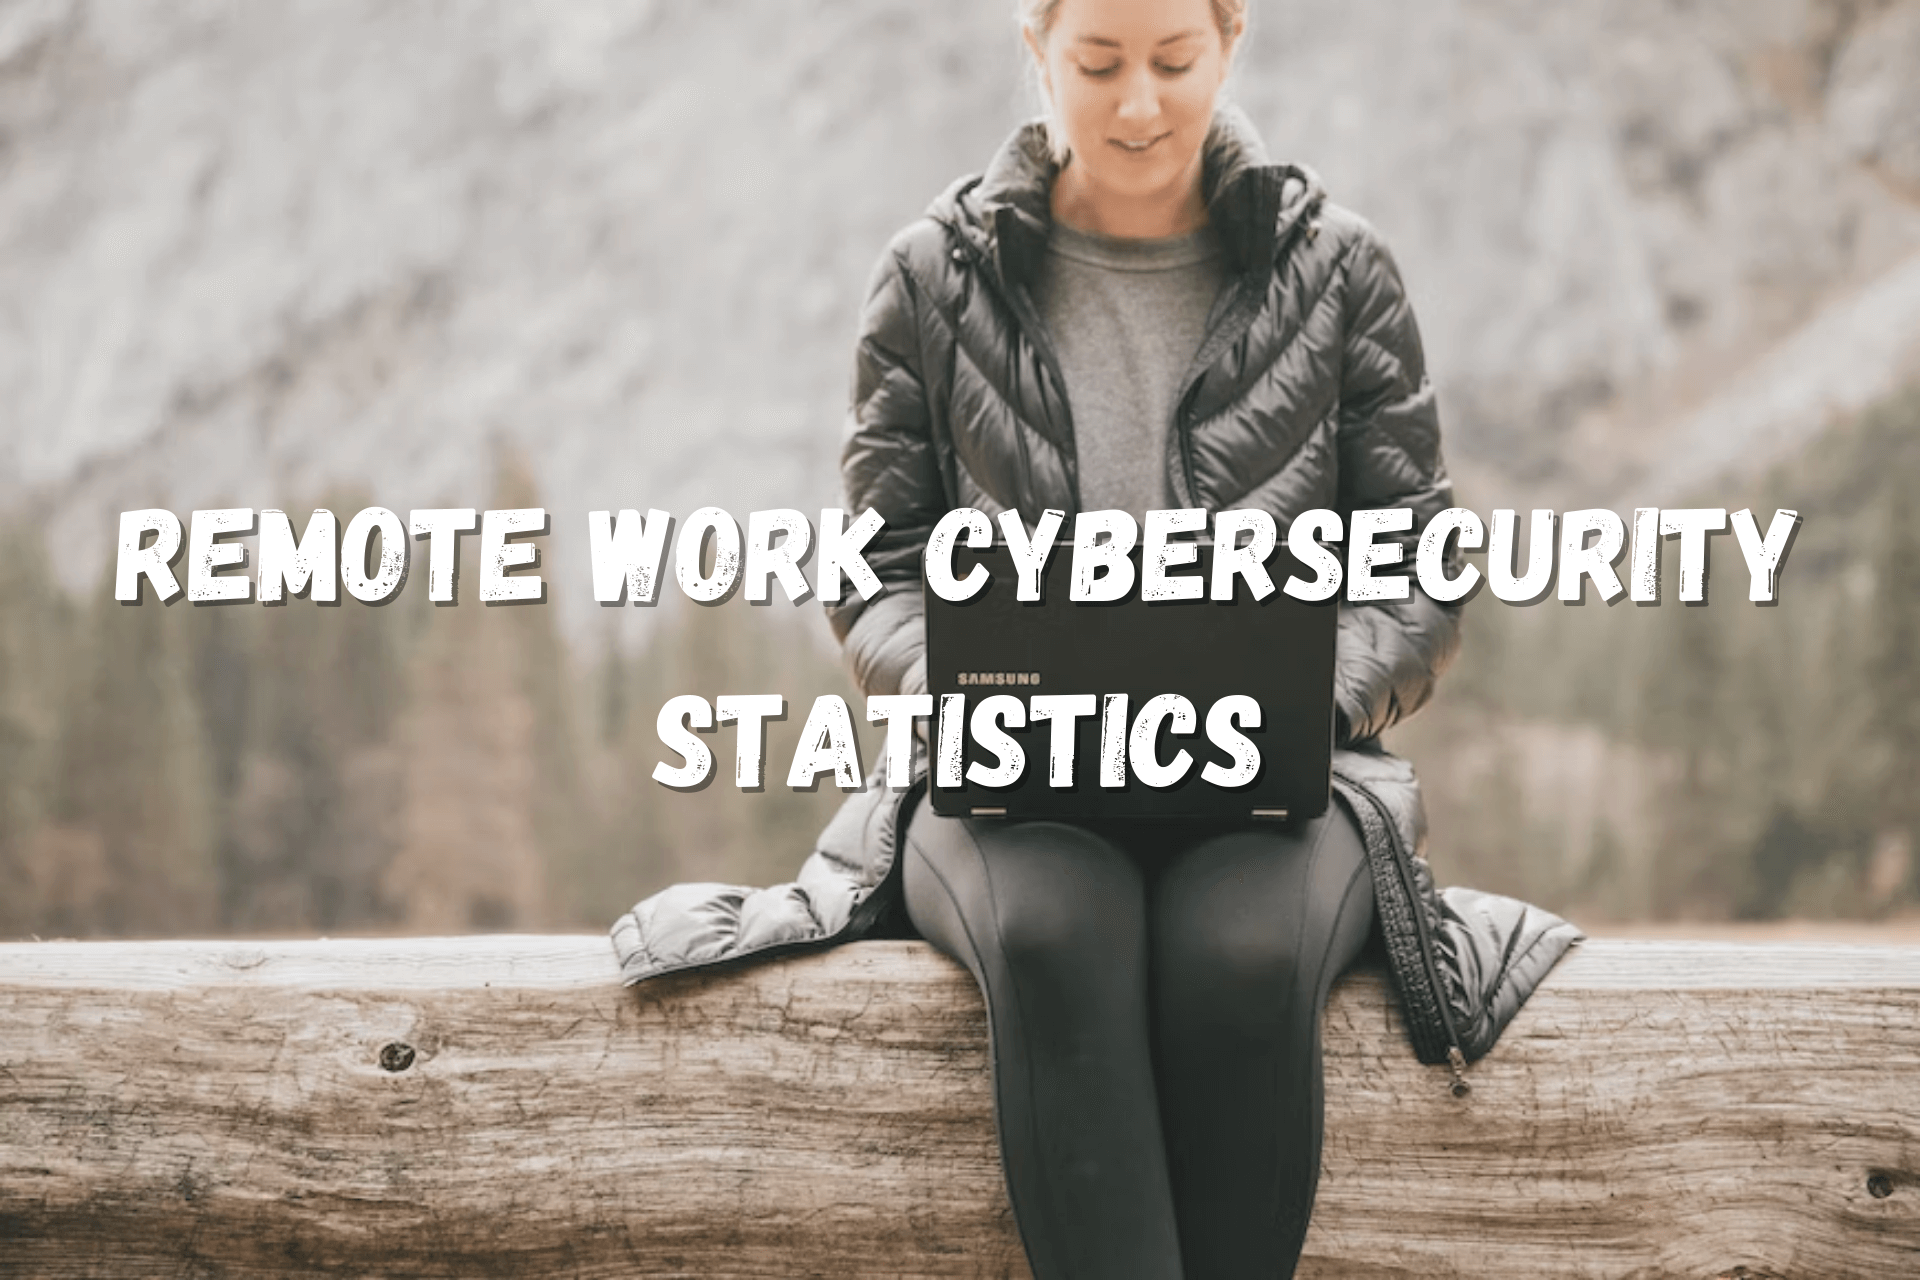 Remote work cybersecurity statistics